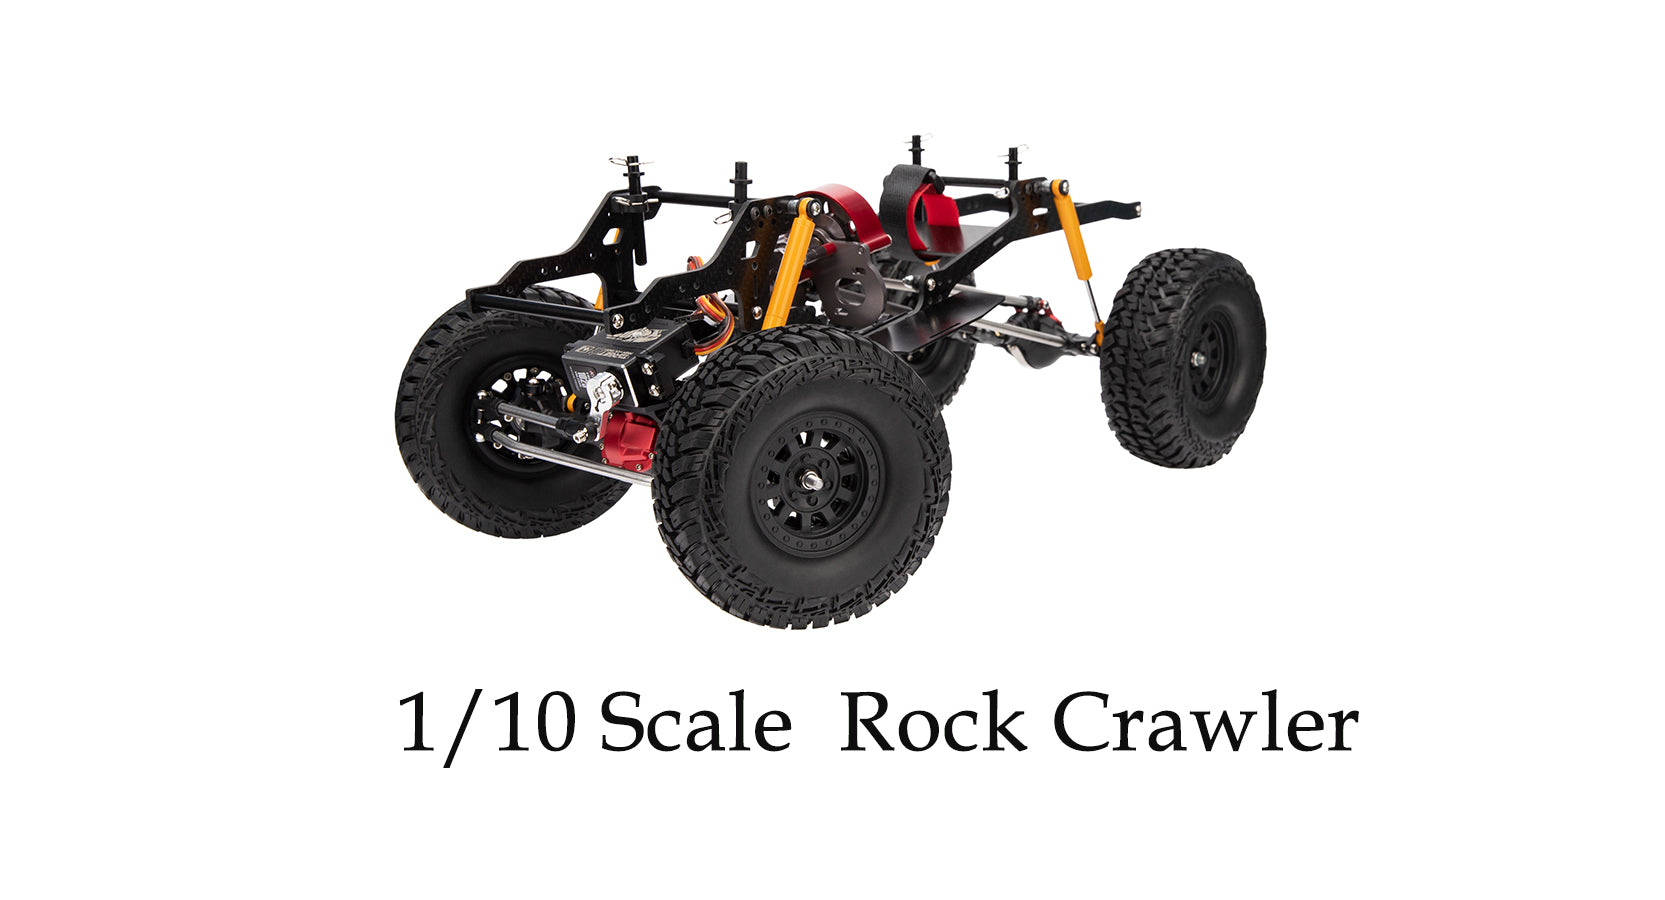 1/10 Scale Rock Crawler Accessories